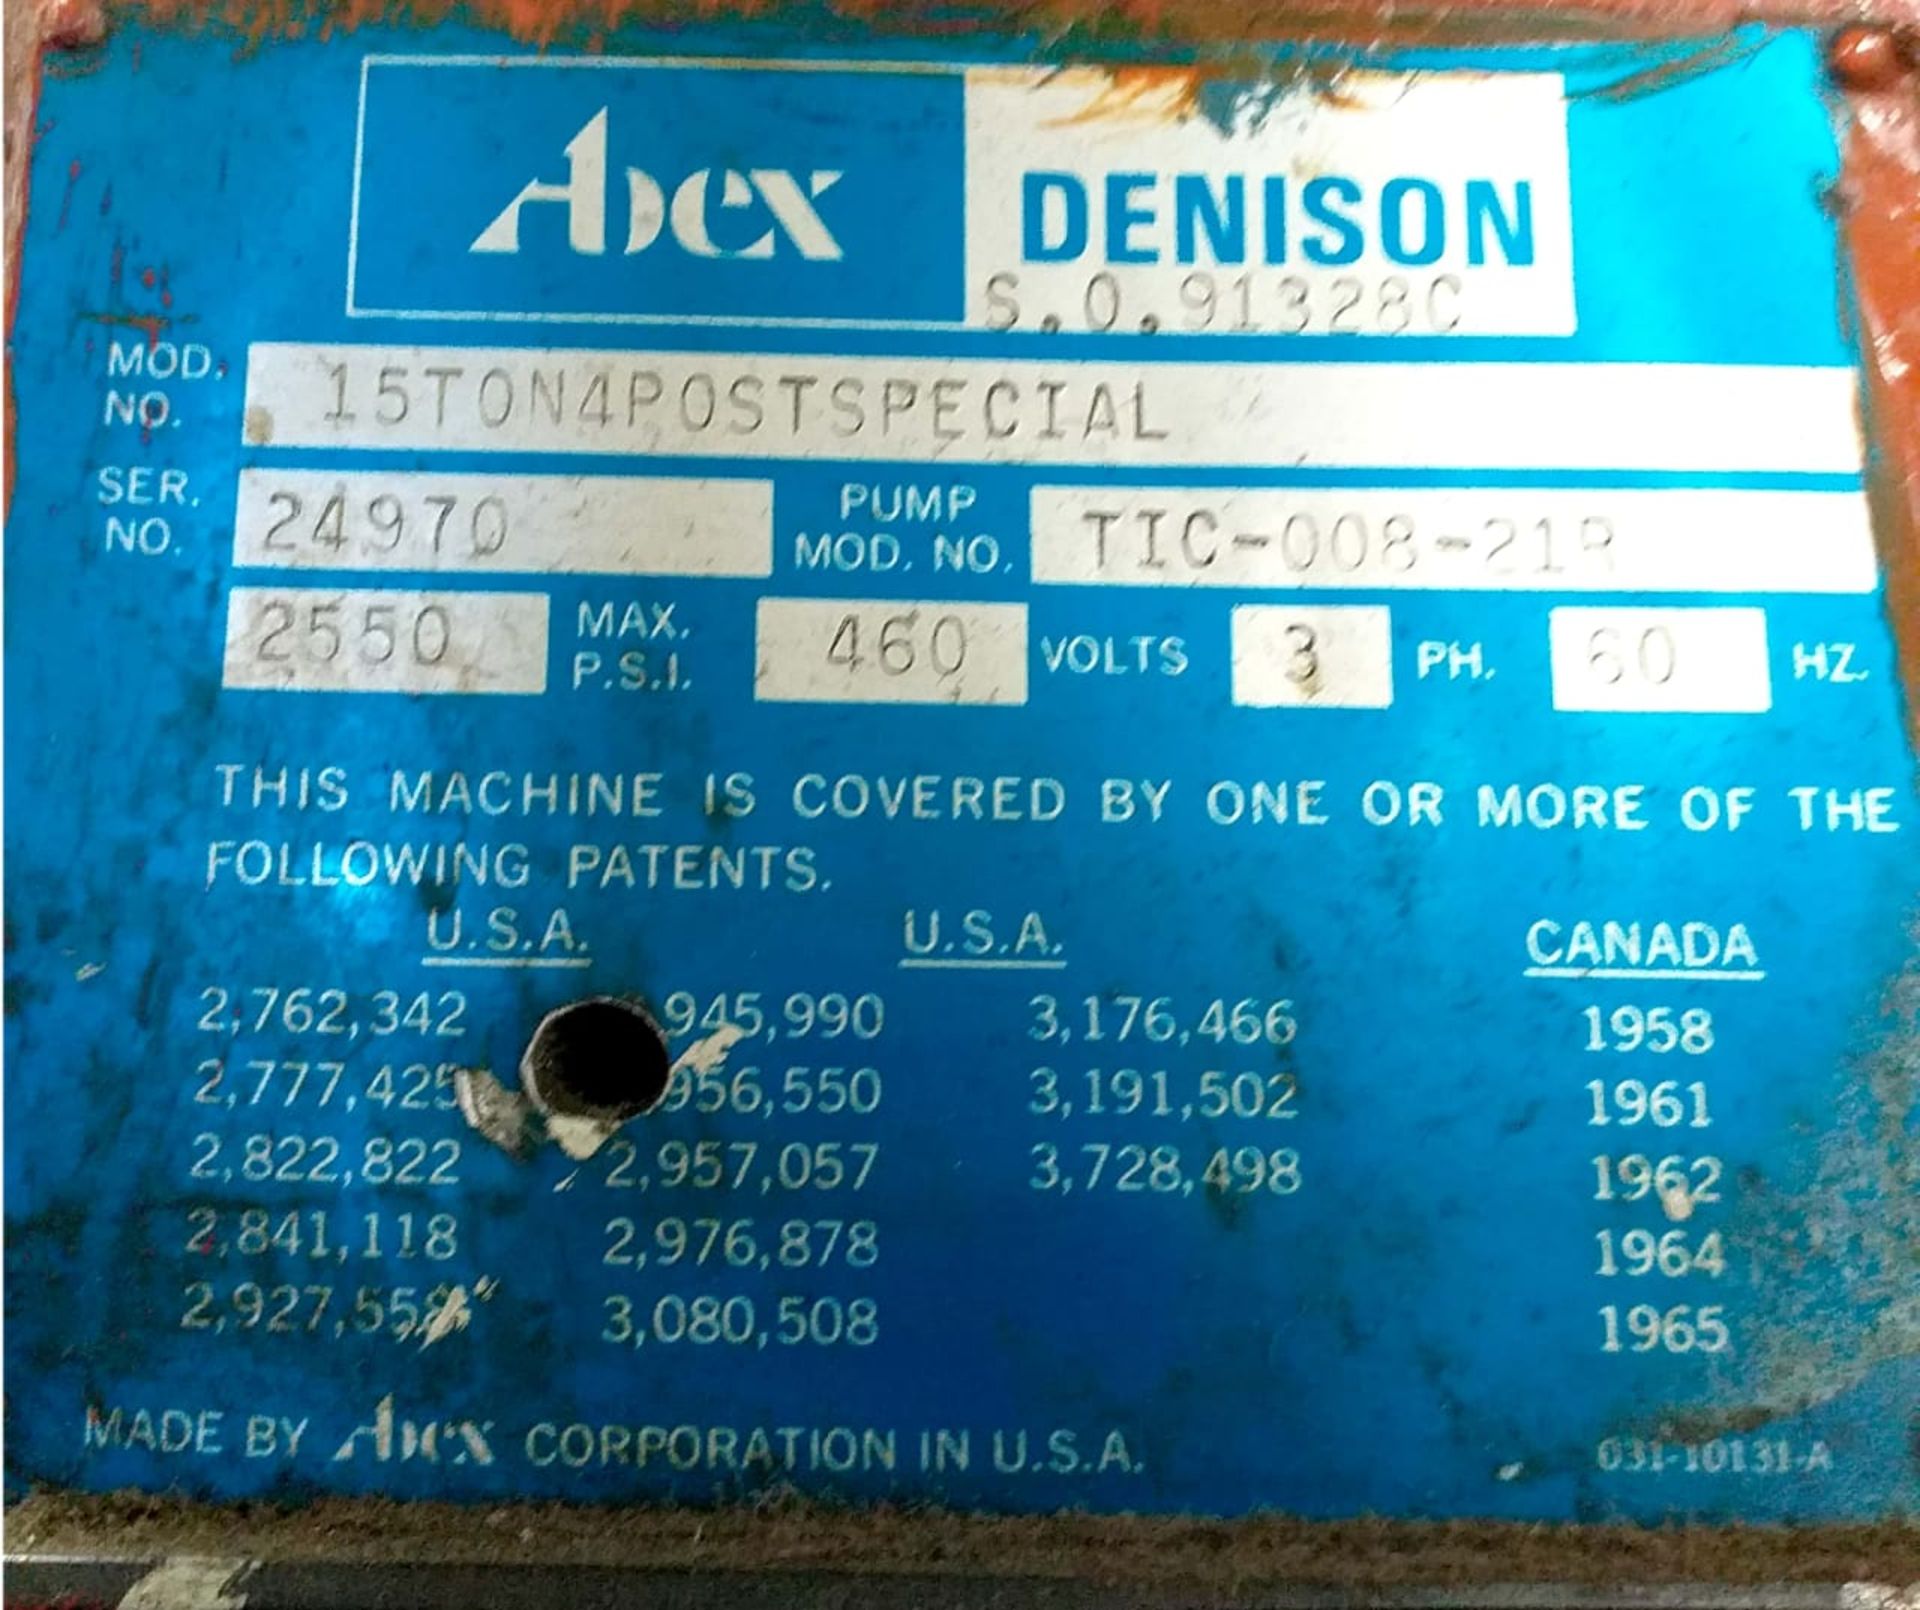 MULTIPRESS ABEX DENISON First form press, Model 15tons 4 Postspecial, N/S 24970, Pump No. TIC-008- - Image 2 of 2